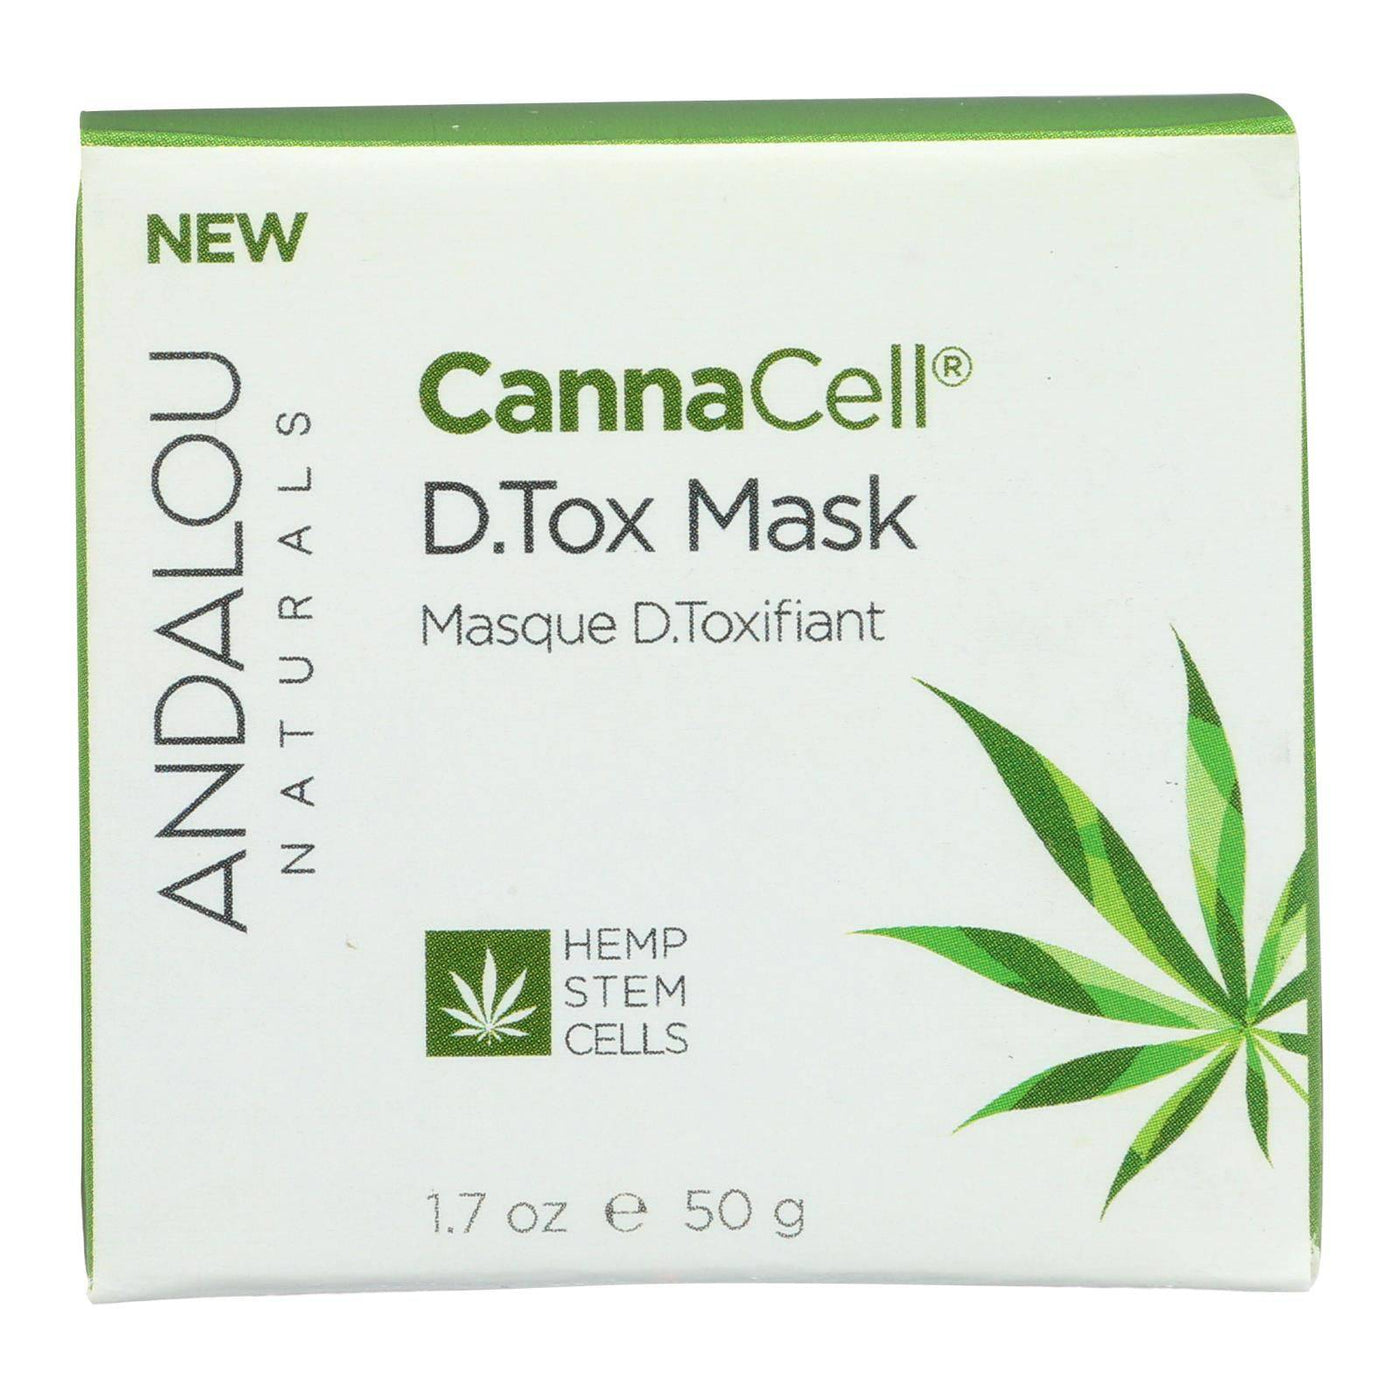 Andalou Naturals - Cannacell D.tox Mask - 1.7 Oz. | OnlyNaturals.us